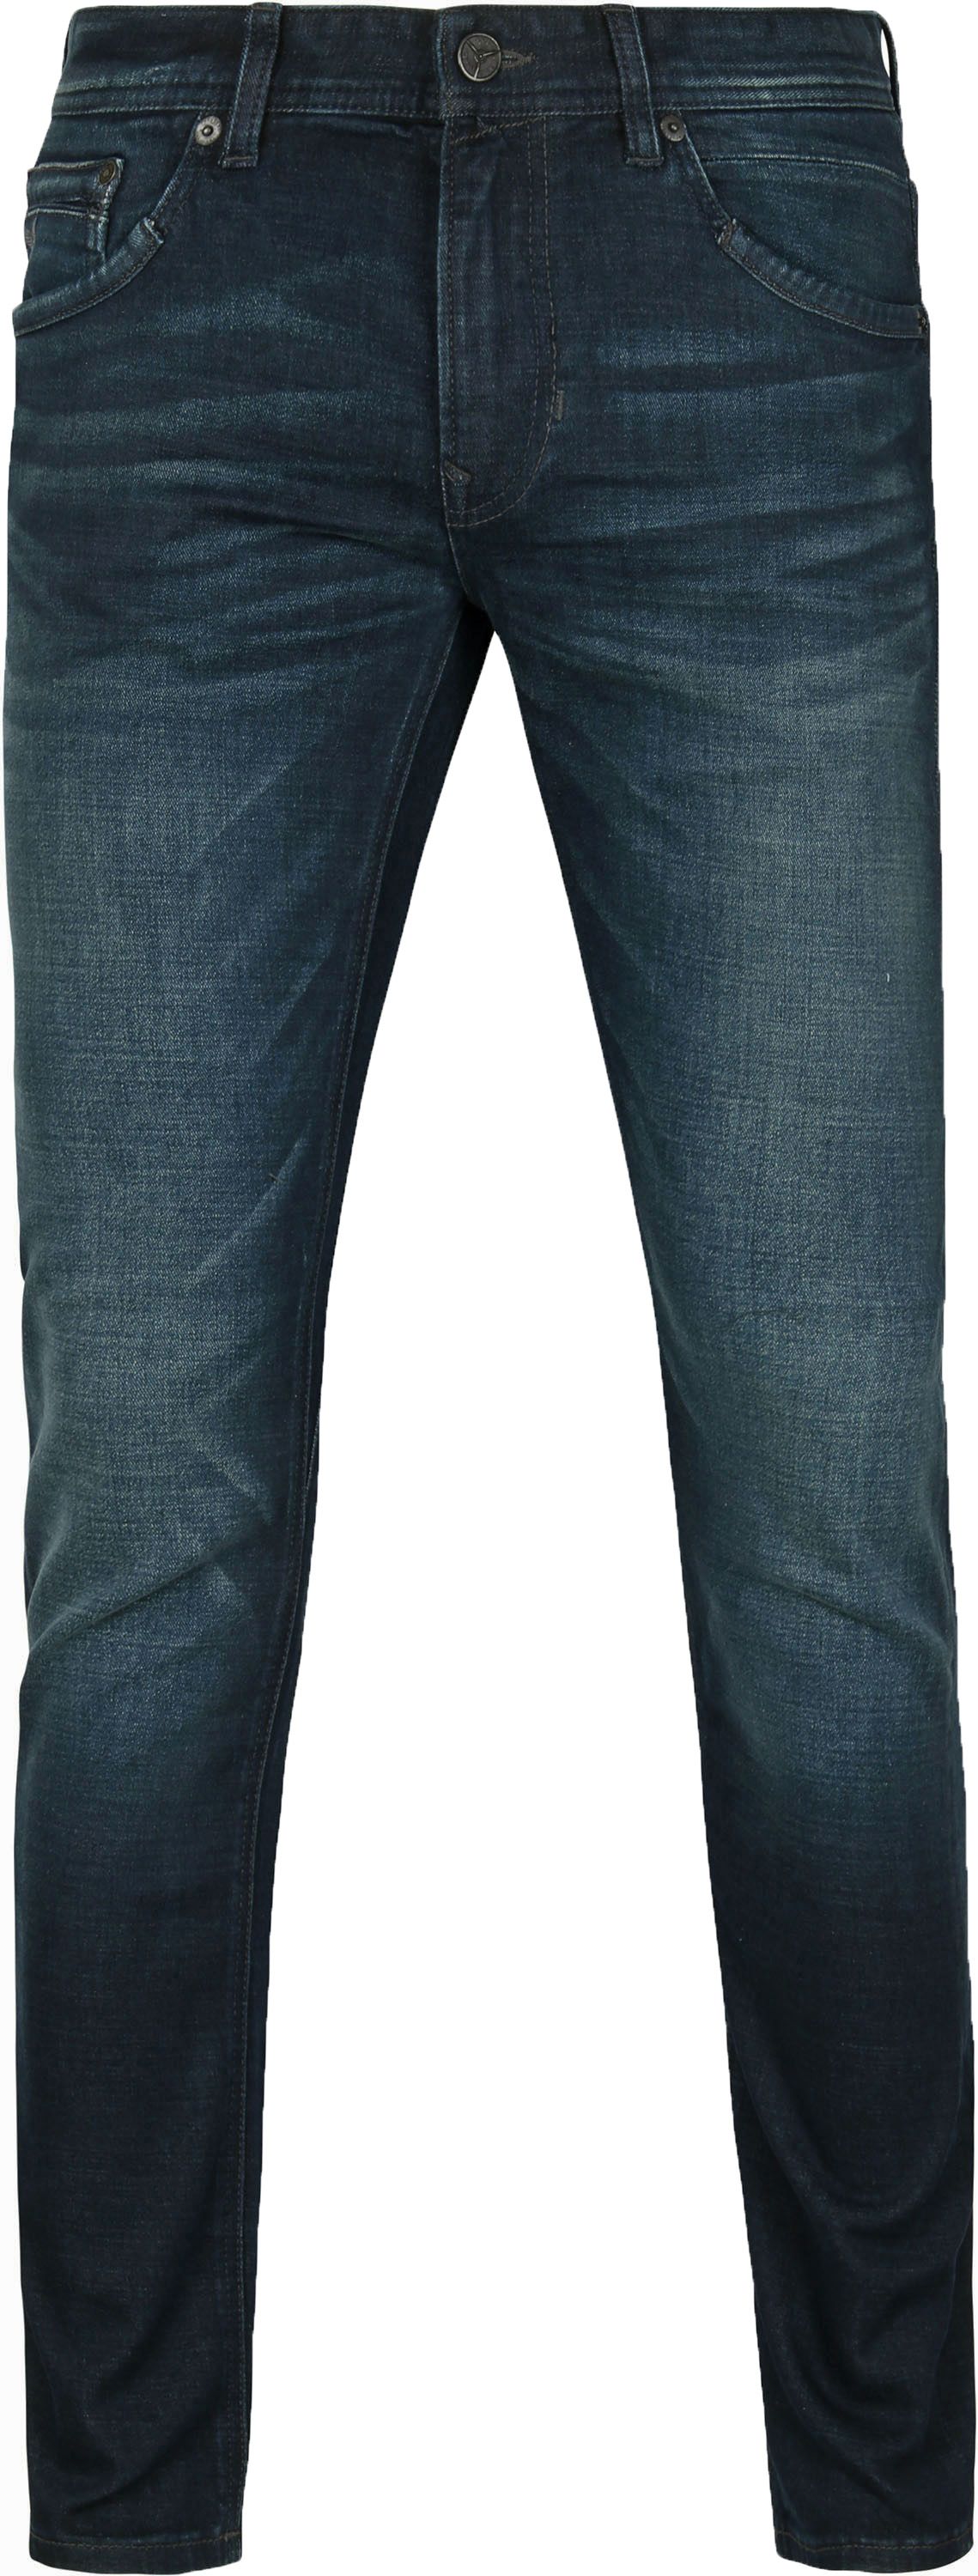 PME Legend Tailwheel Jeans Dark Indigo Blue Dark Blue size W 28